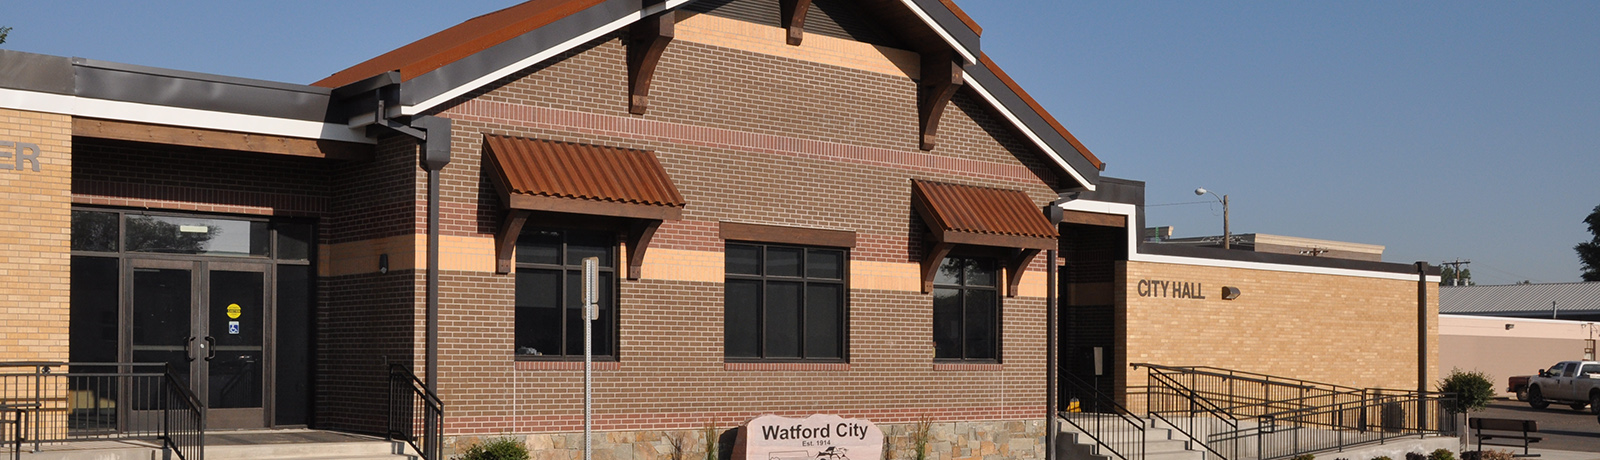 Watford City, City Hall Renovations